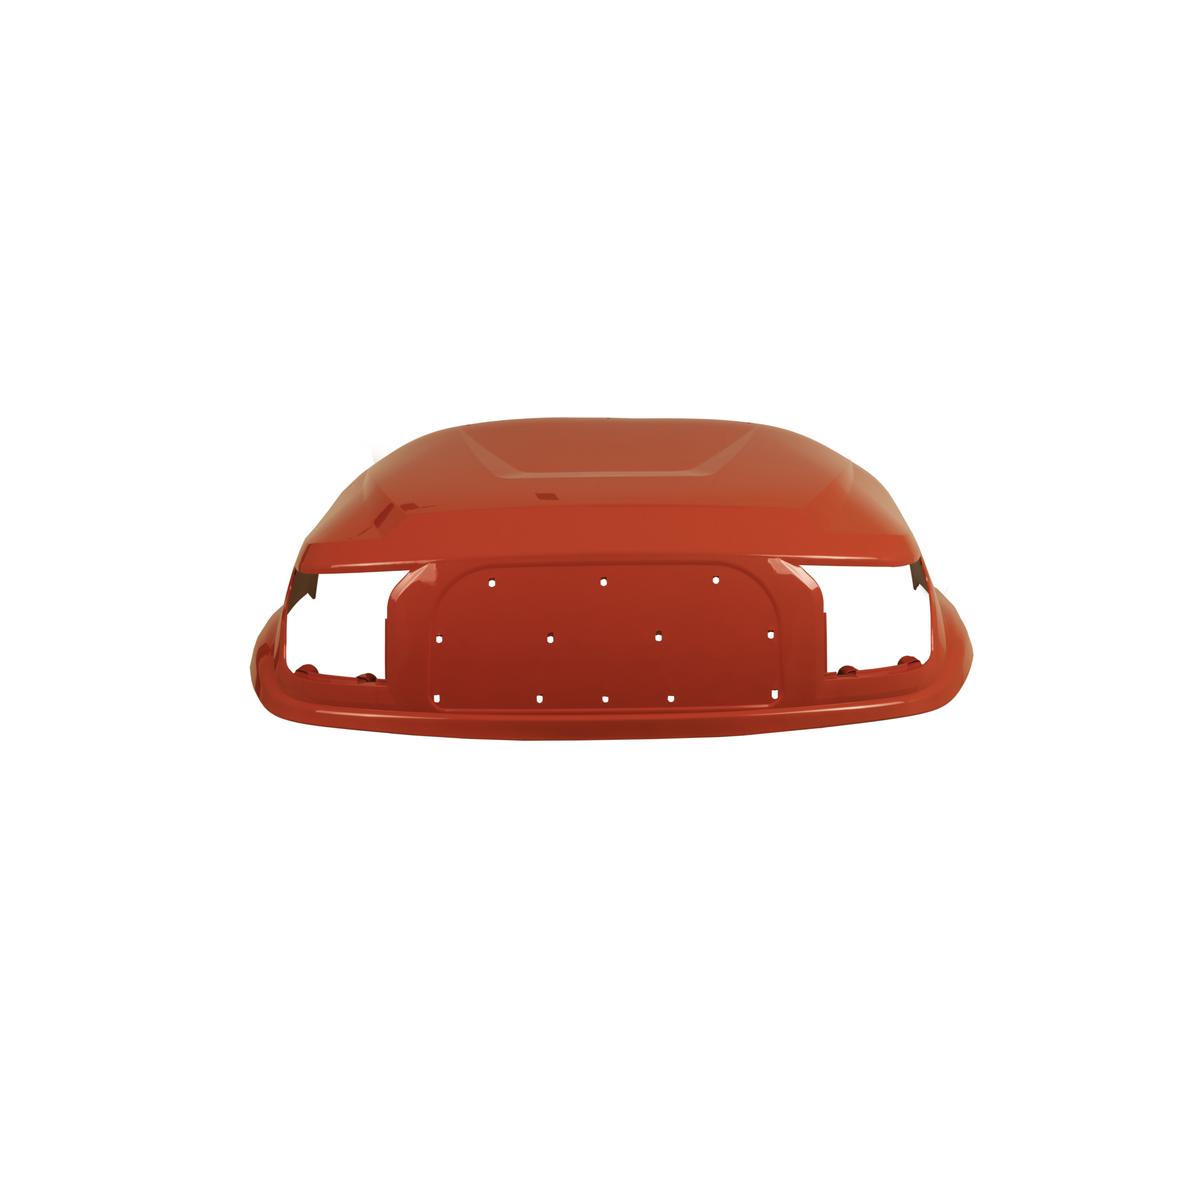 Limited Edition MadJax ALPHA Body Kit in Sunset Orange Metallic for Club Car Precedent | Onward | Tempo